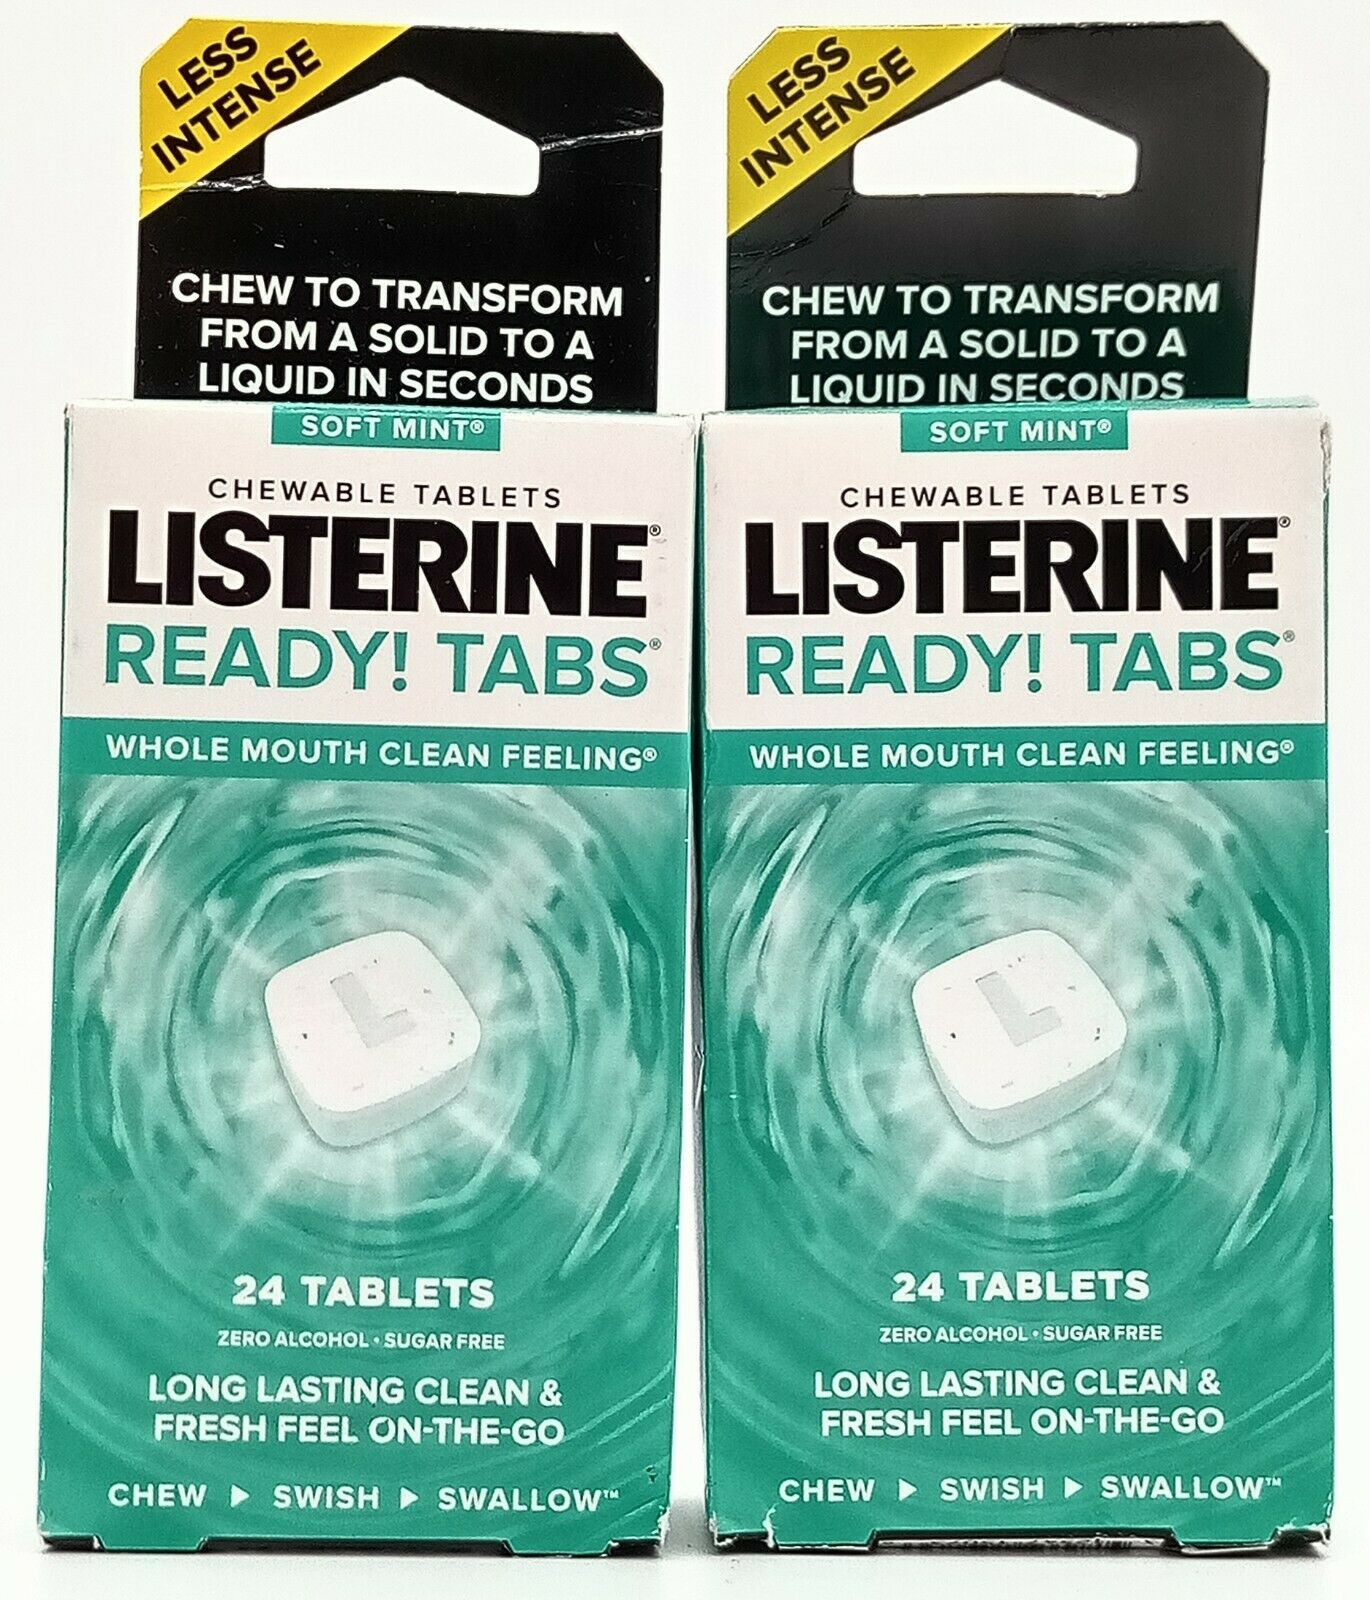 Listerine Ready! Tabs Less Intense Sugar Free Soft Mint (24 Tablets). Lot Of 2